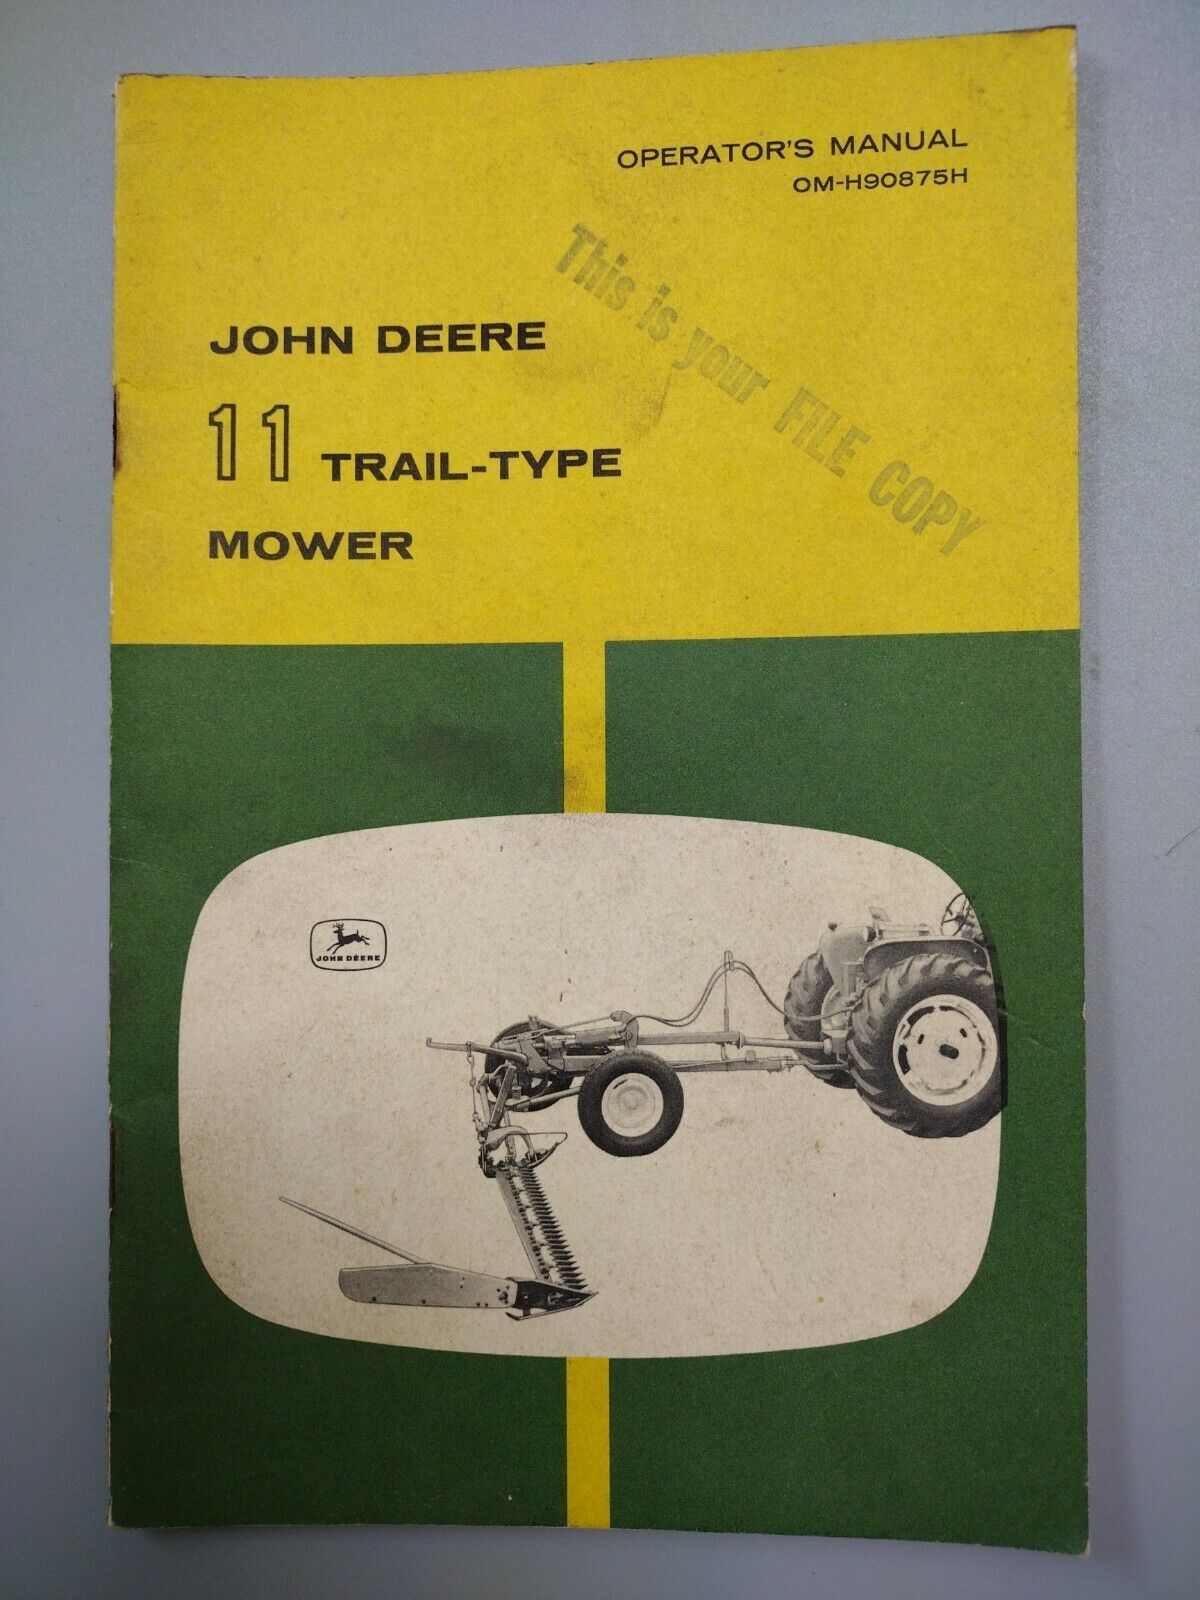 Old 1962 John Deere 11 Trail Type Mower Operators Manual Om-h90875h